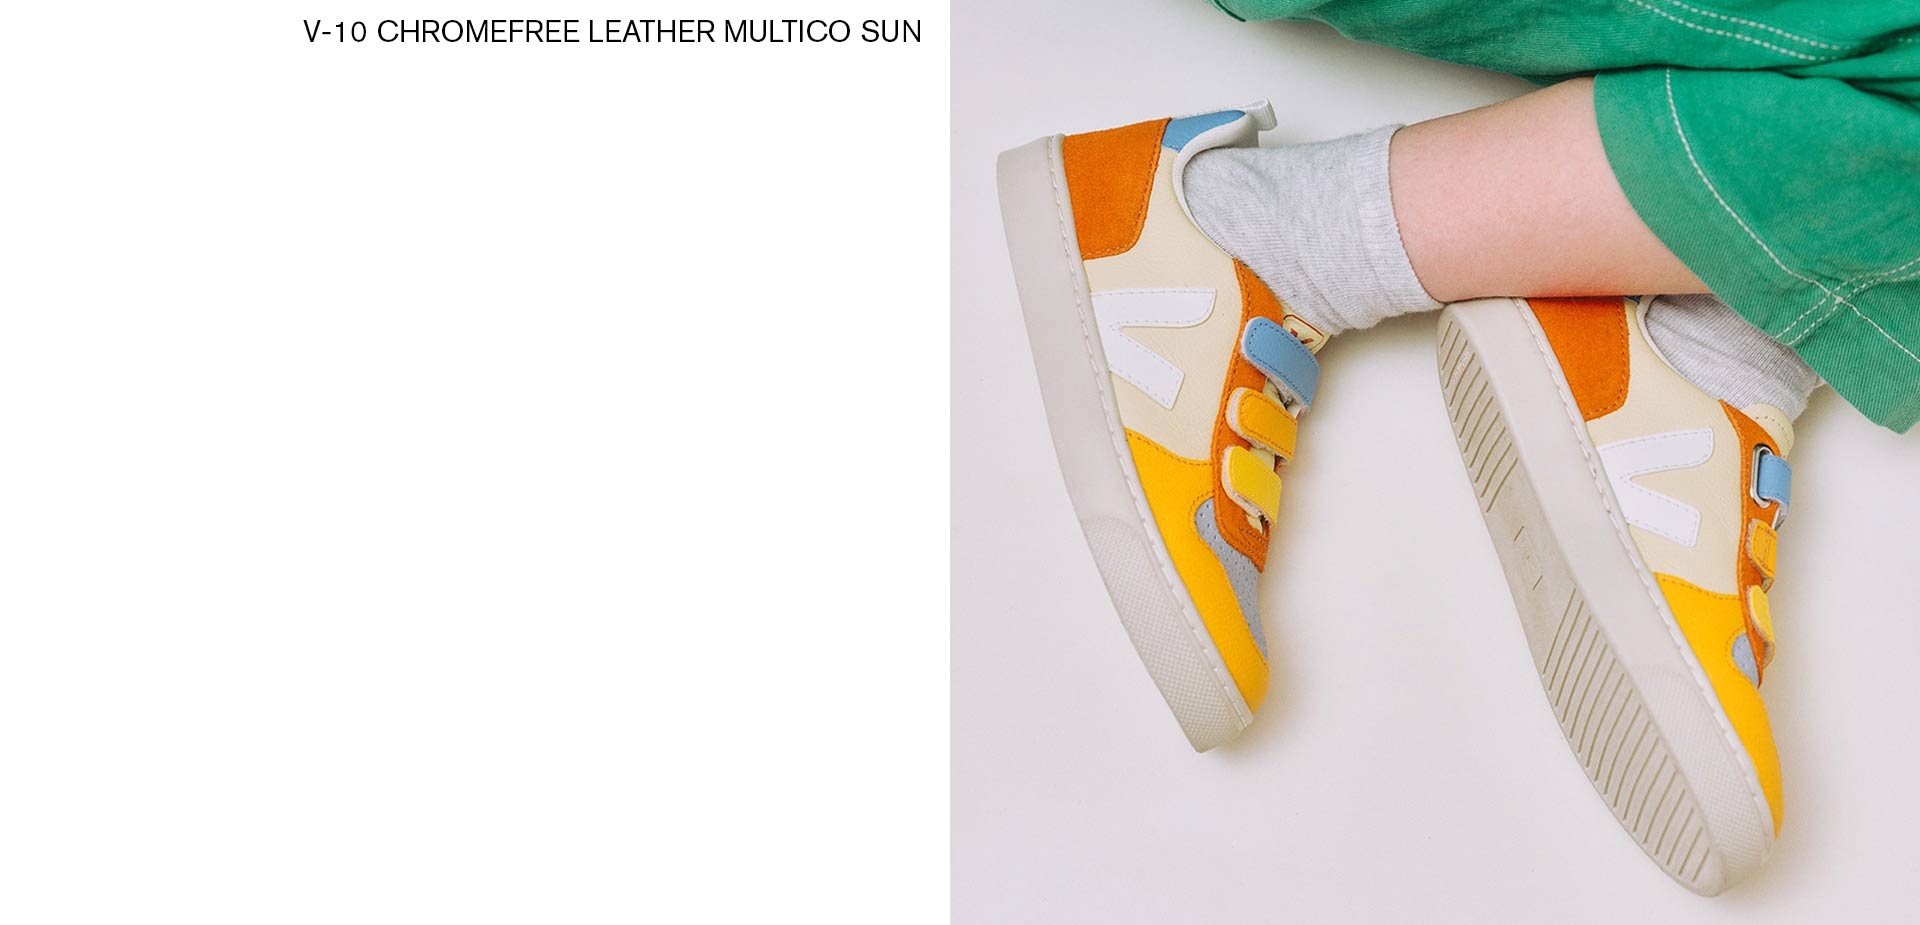 V-10 chromefree leather multico sun sneakers